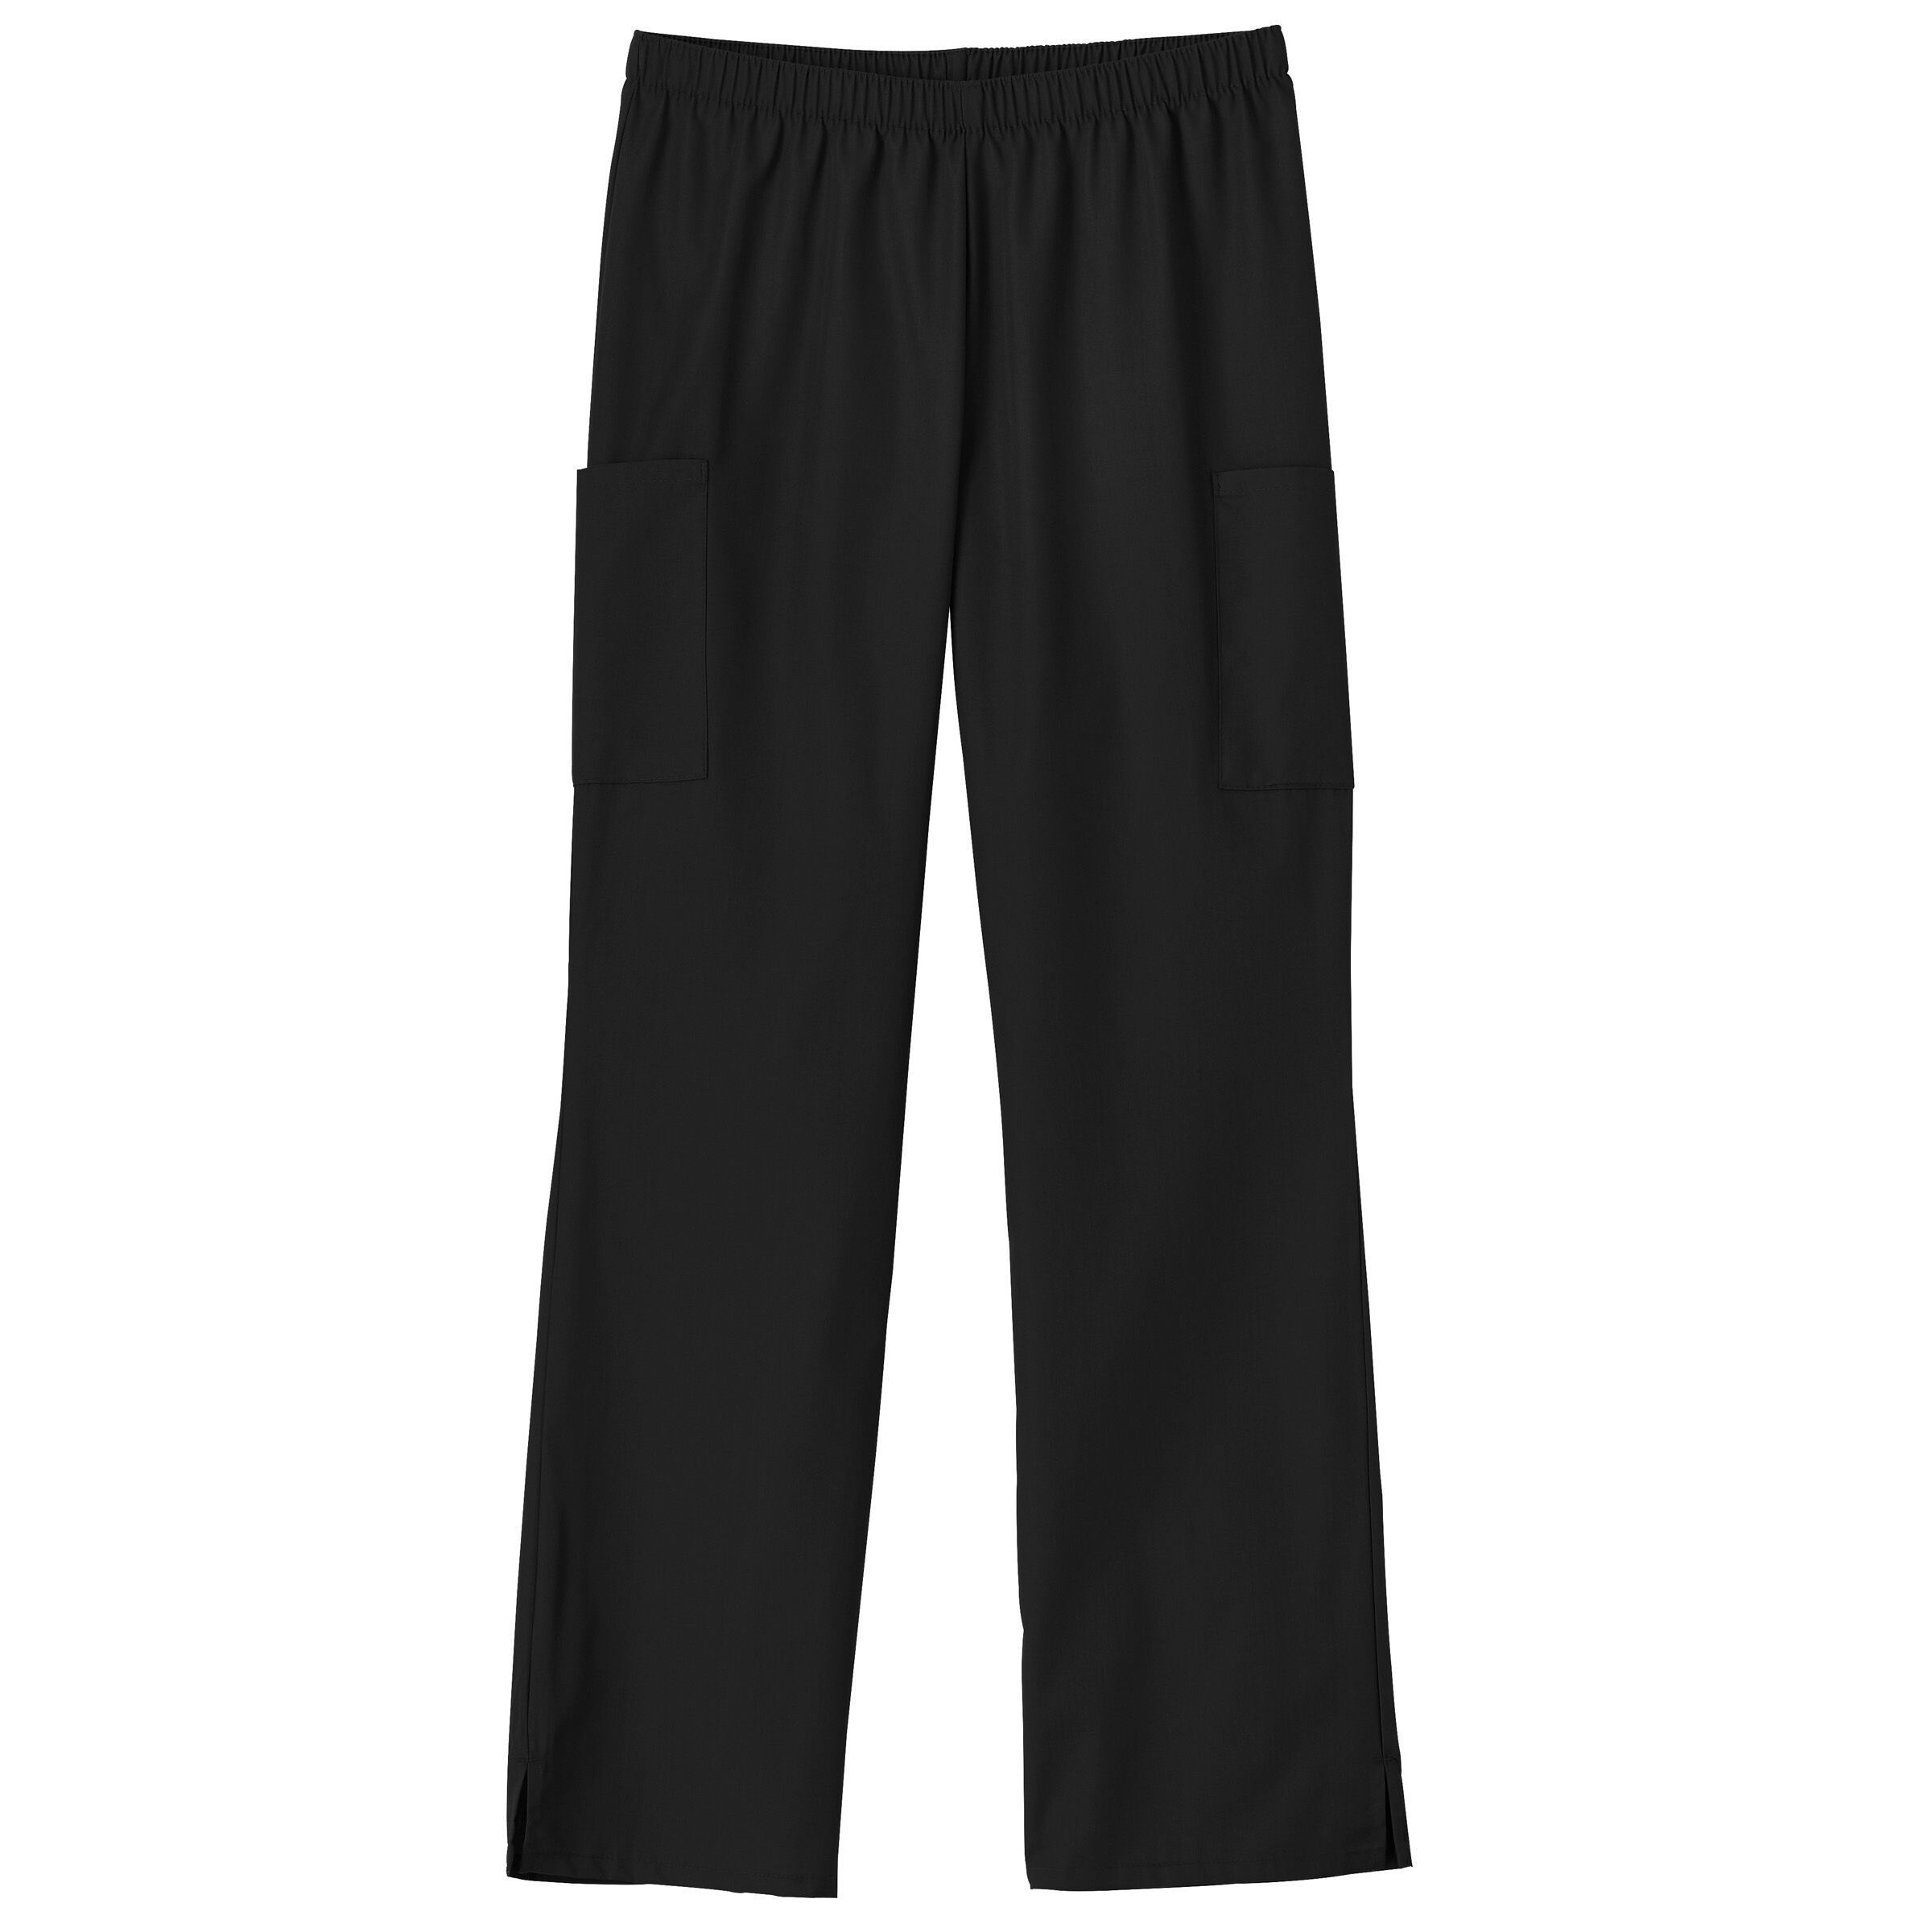 Fundamentals Ladies Cargo Pant Full Elastic, Black, large image number 1